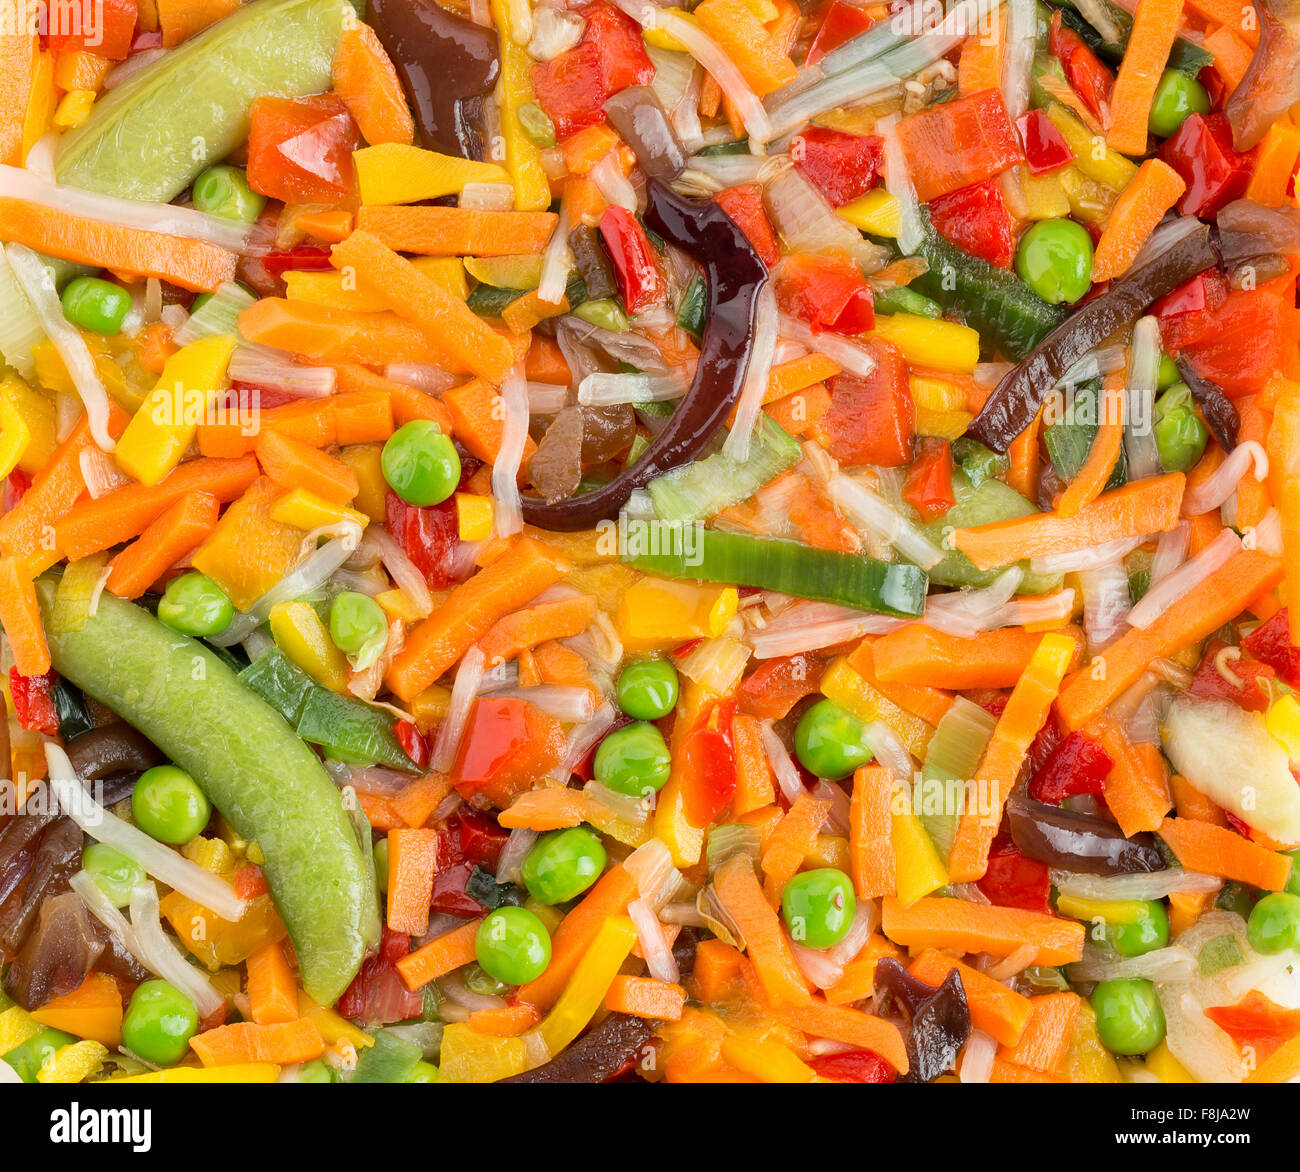 Cerca del corte mezcla de verduras. Foto de stock